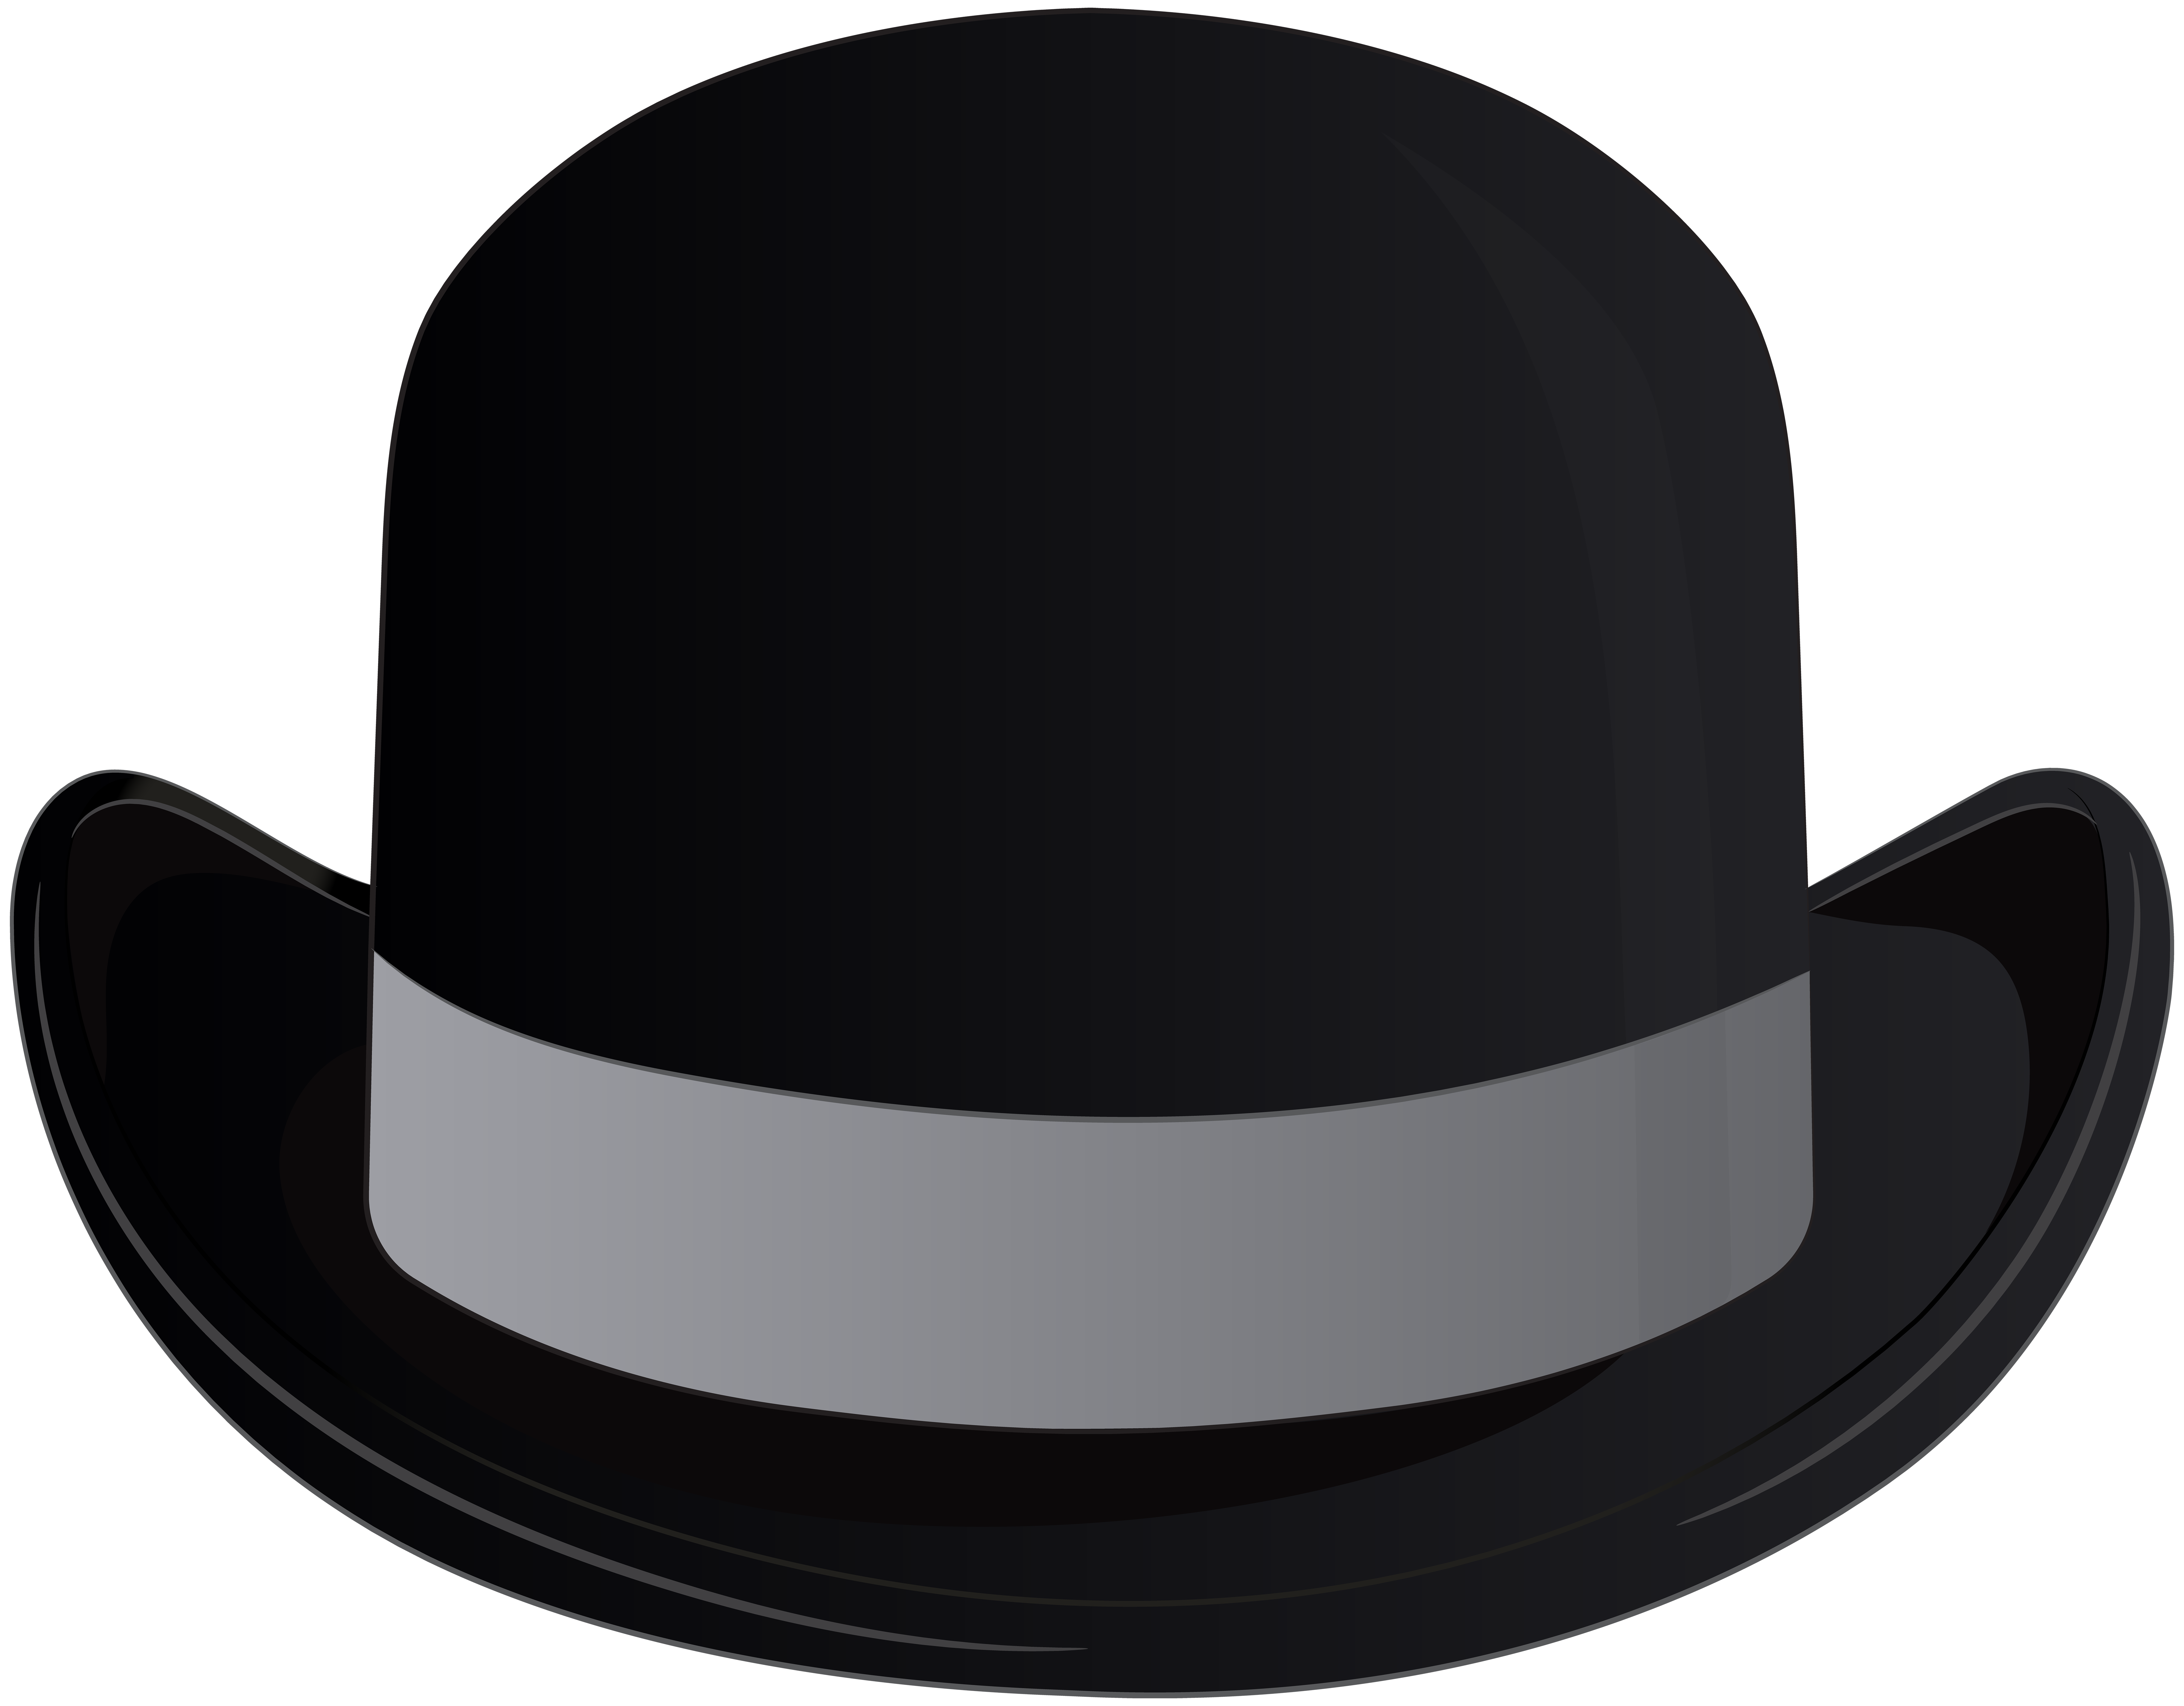 Fedora - Bowler Hat Transparent Clip Art PNG Image png download - 8000